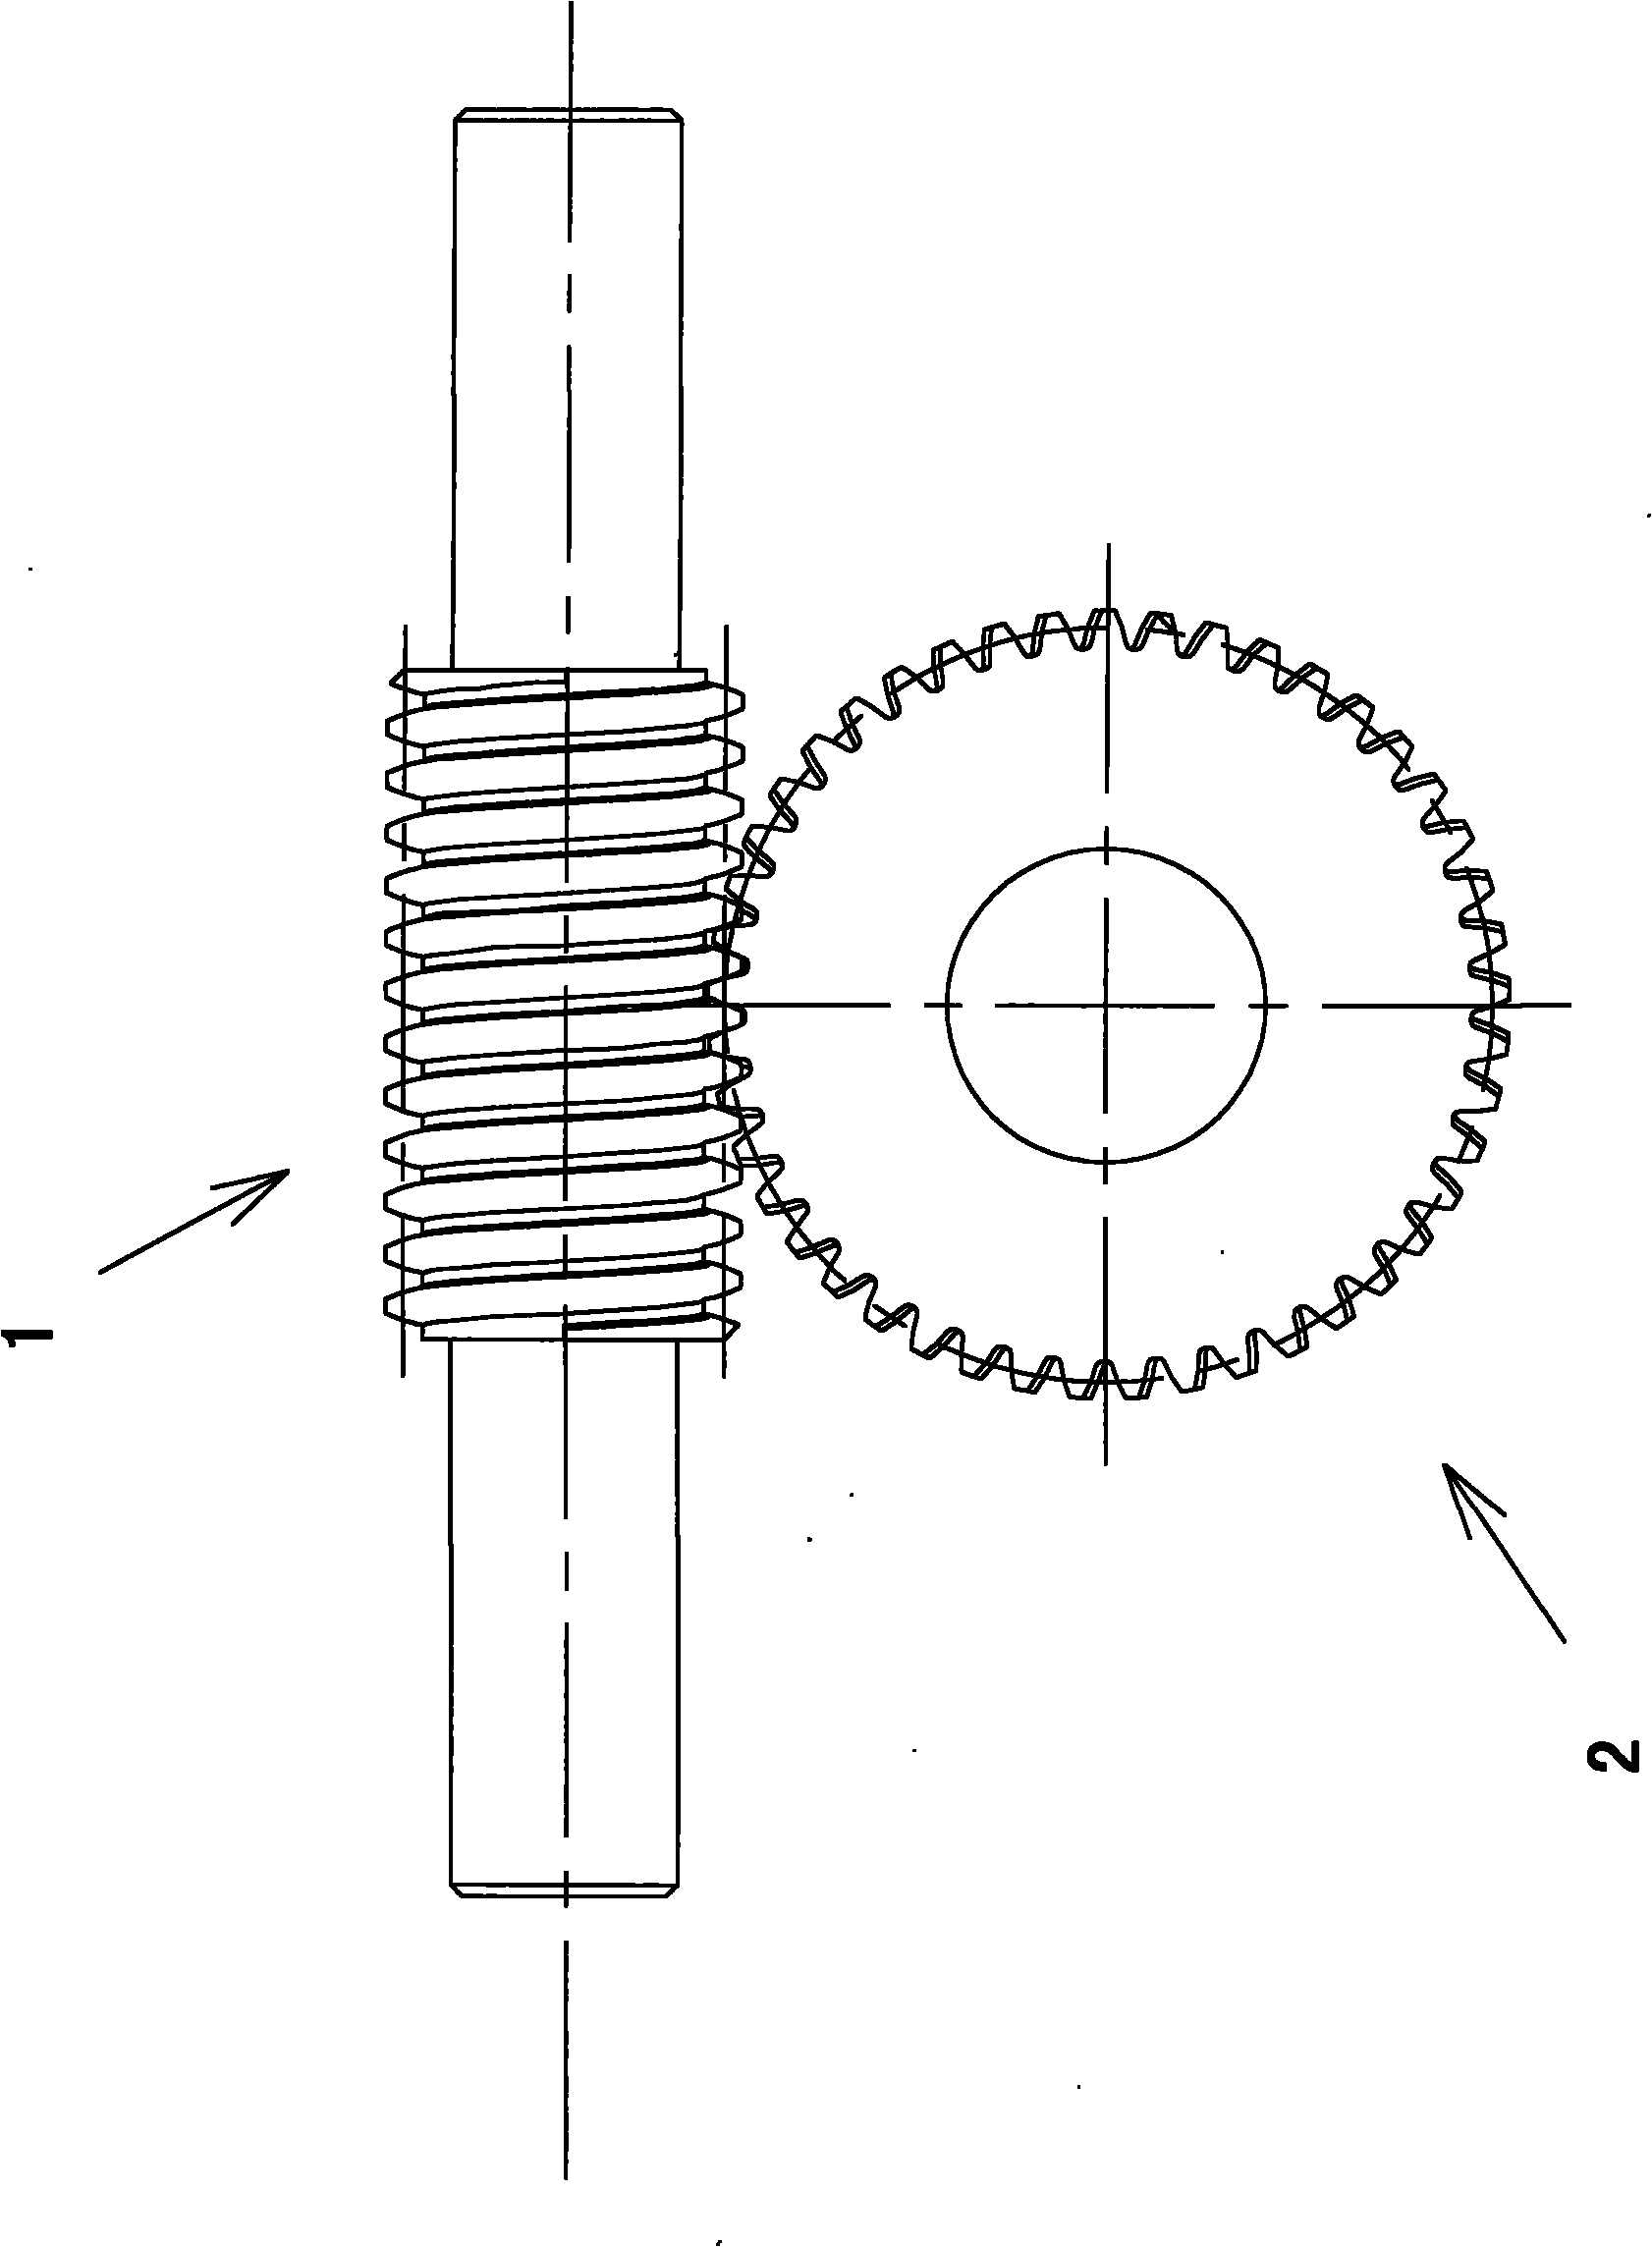 Worm helical gearing mechanism